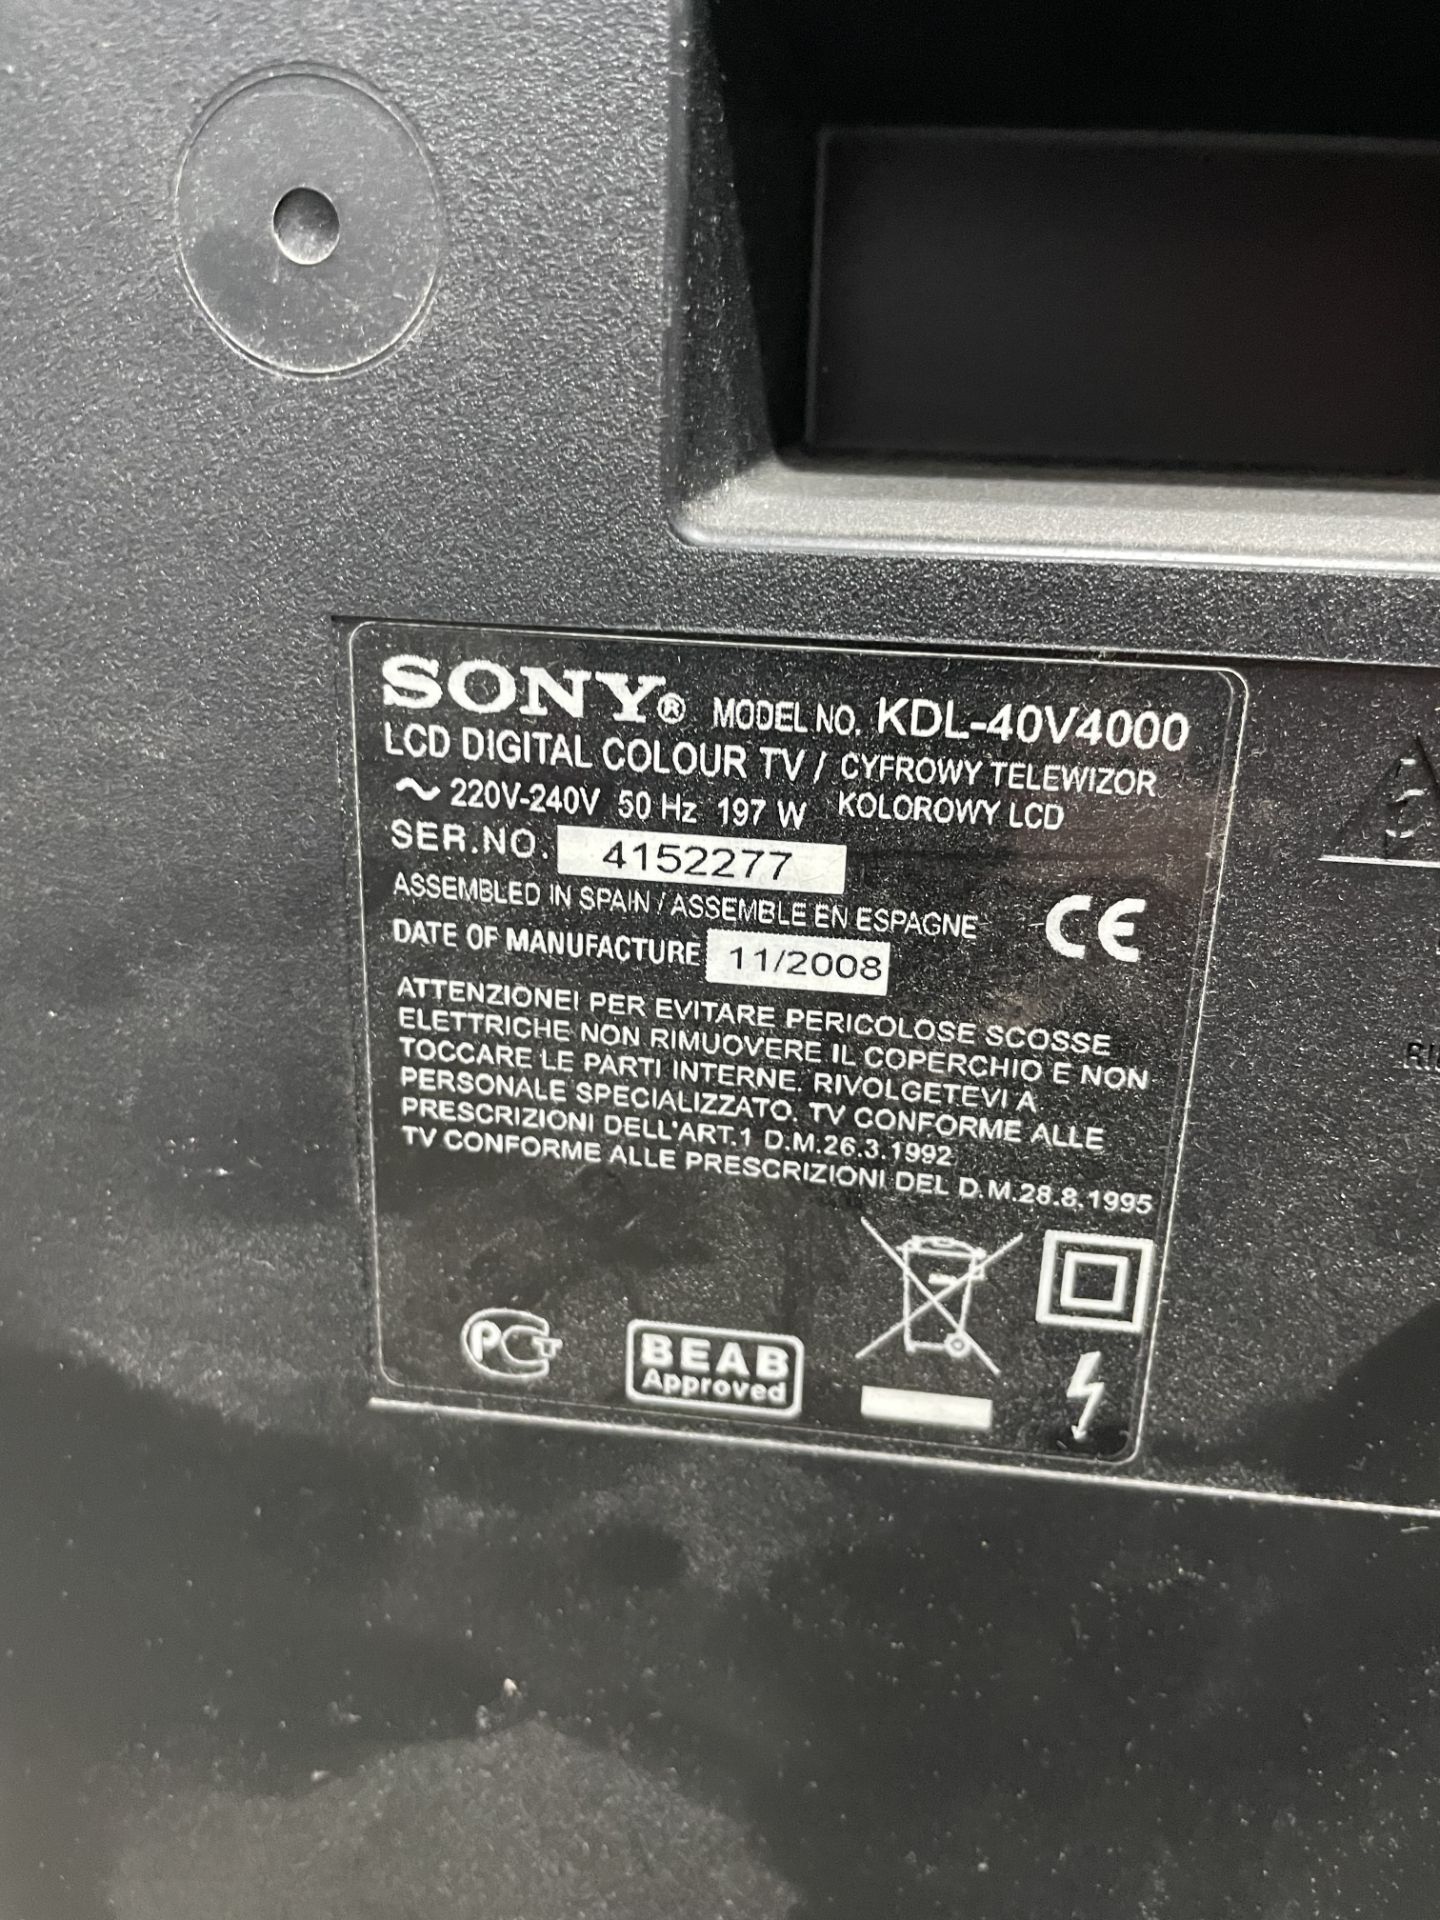 Sony Bravia KDL-40V4000 40" HD Ready LCD Television - Image 2 of 2